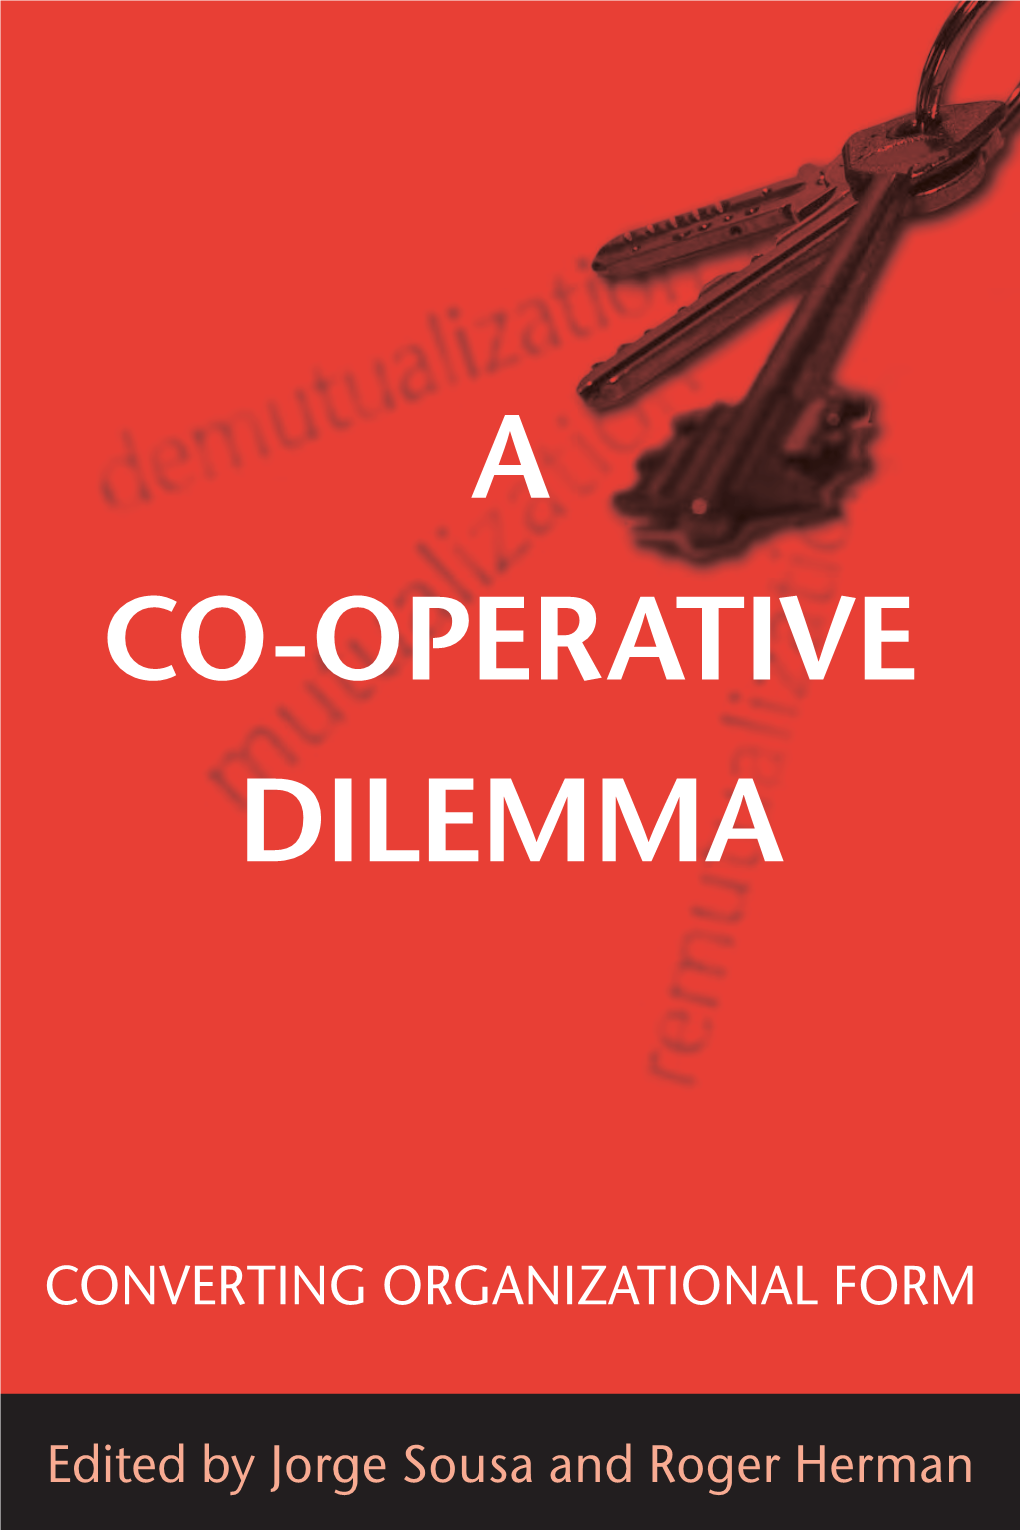 A Co-Operative Dilemma